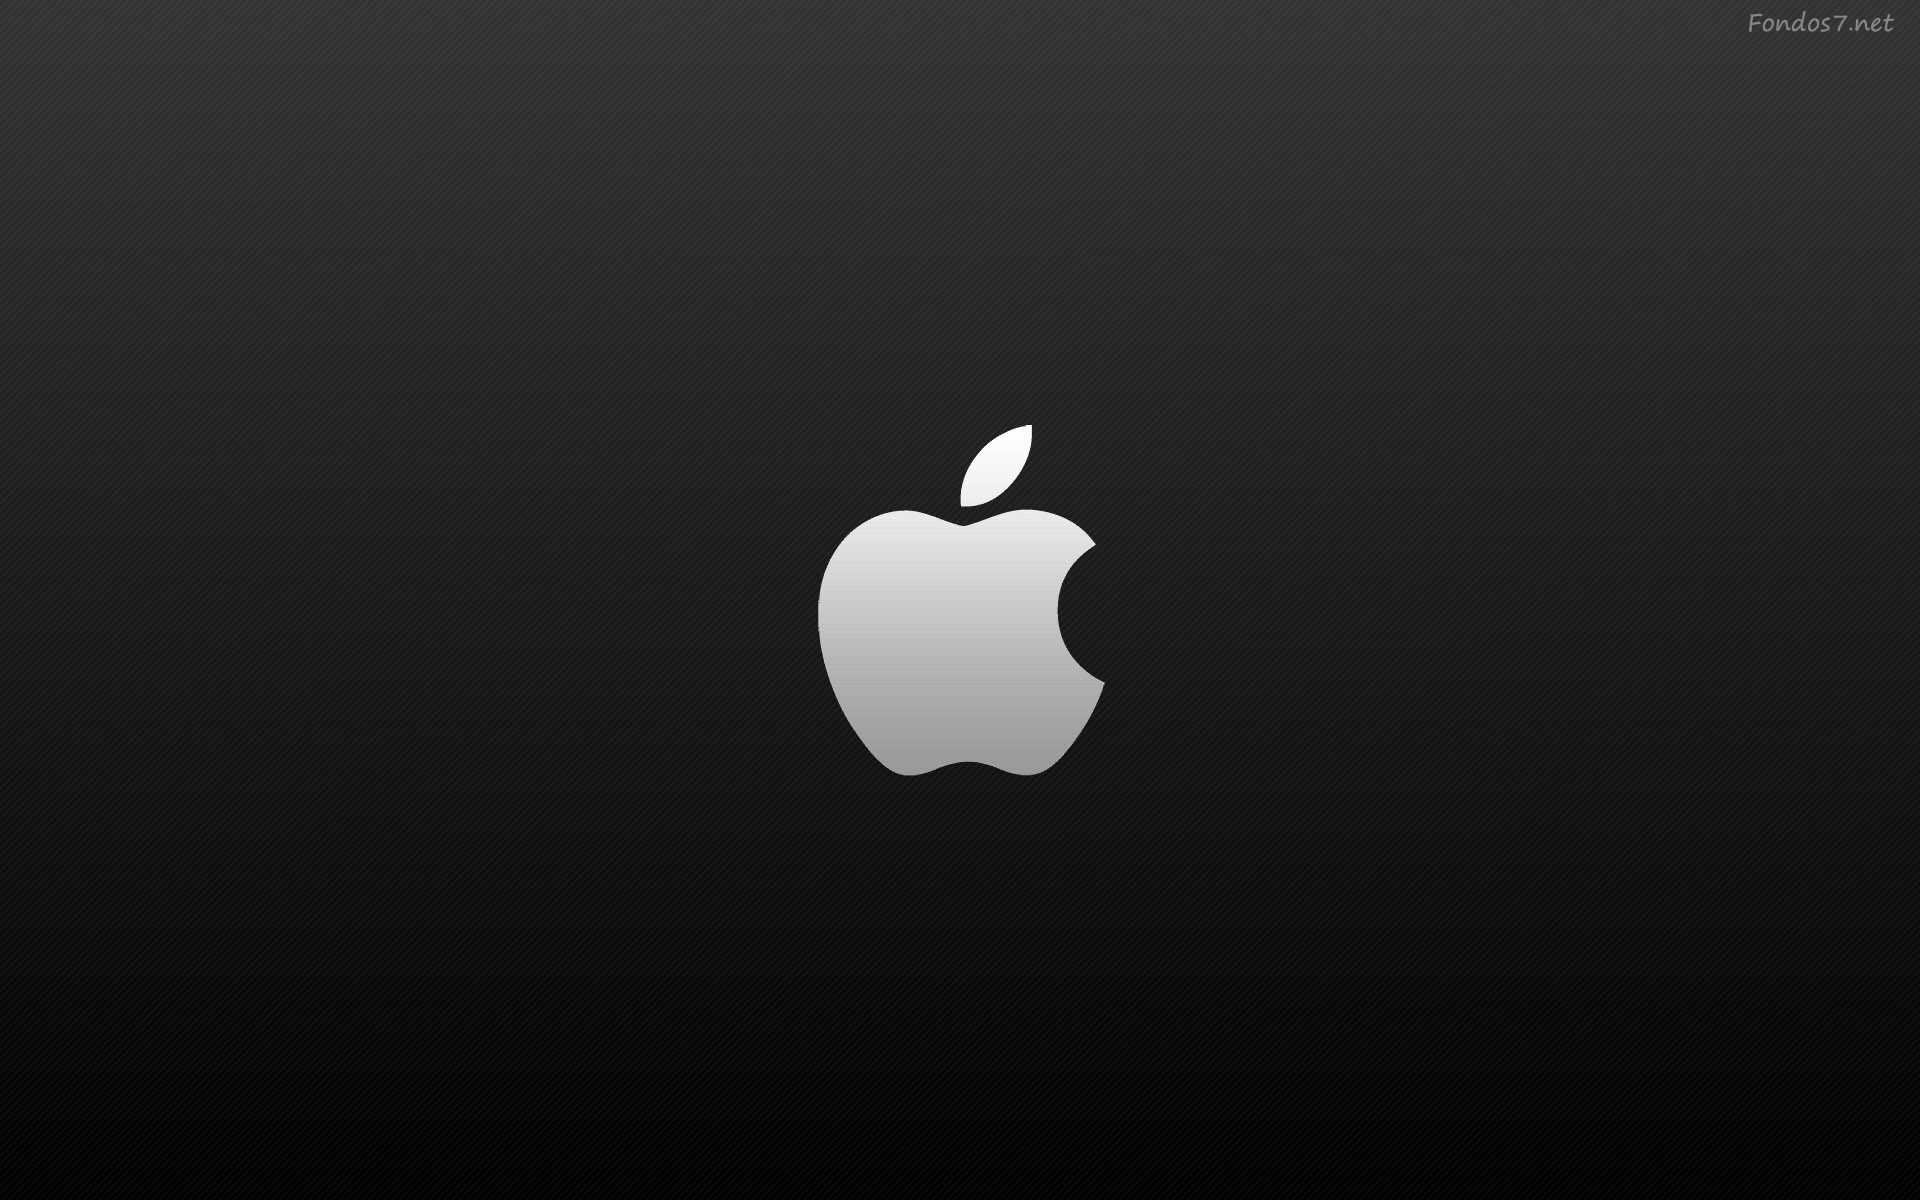  de pantalla logo de apple mac hd widescreen Gratis imagenes 2564